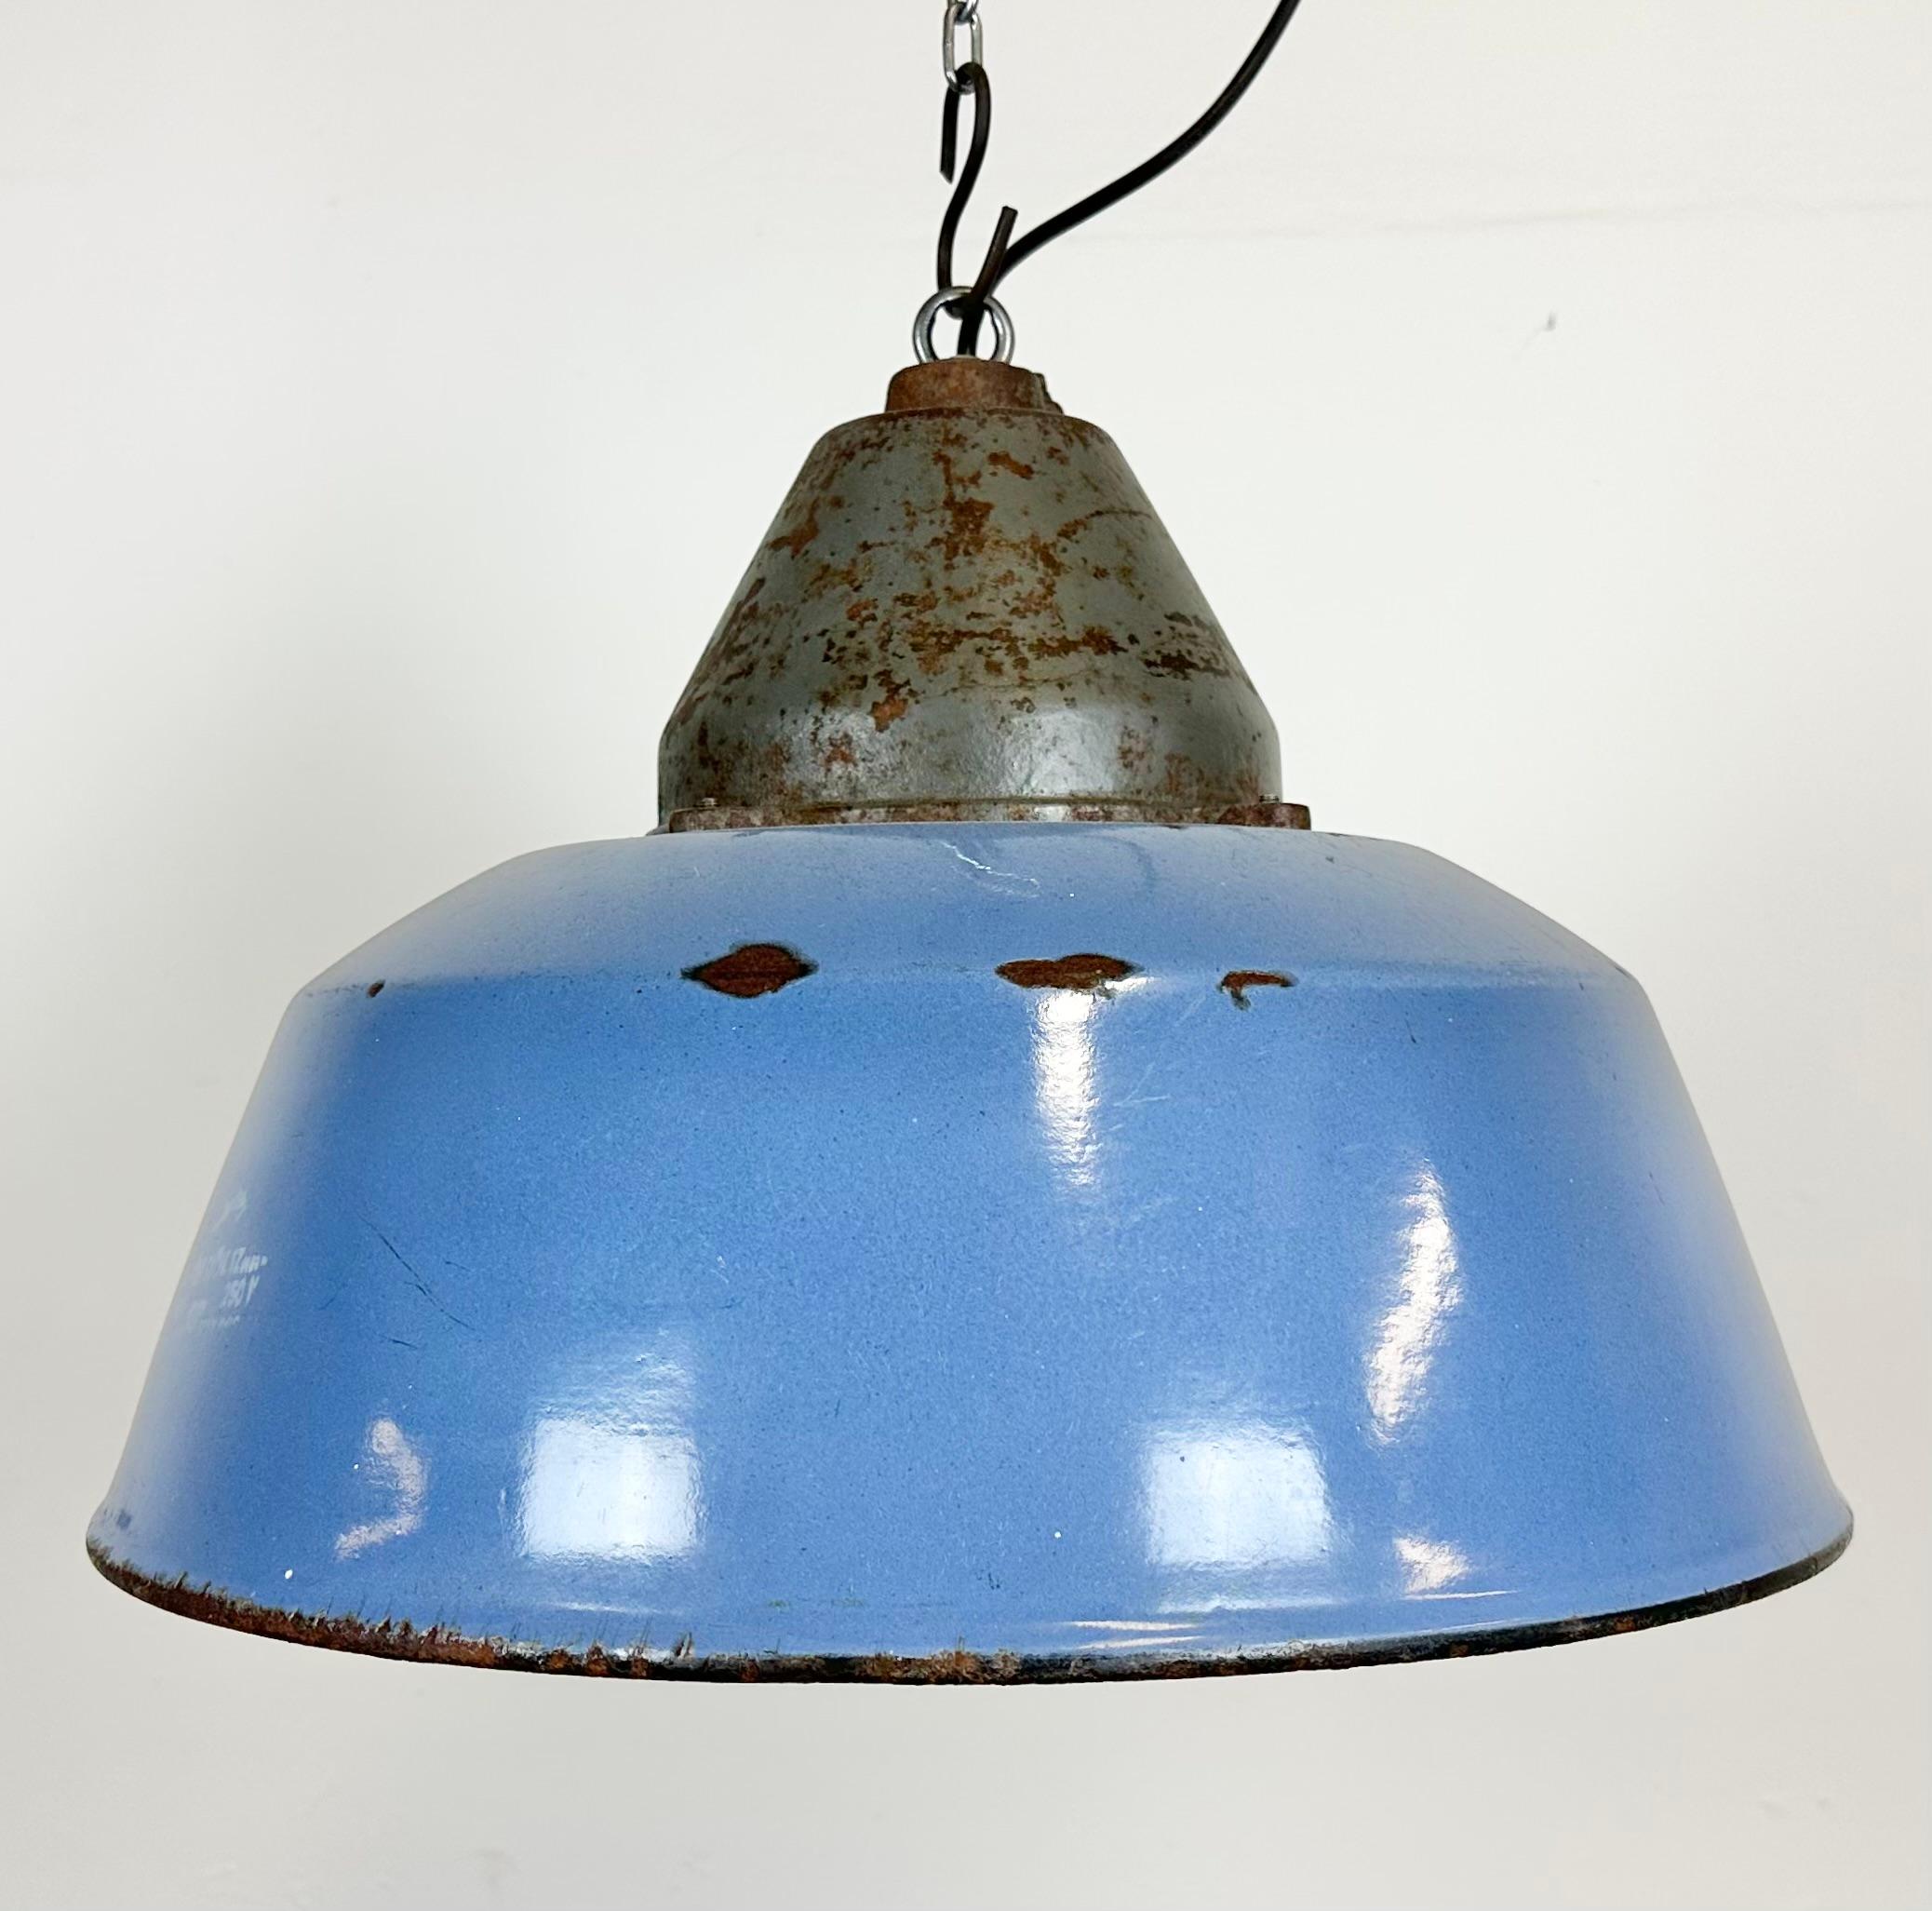 Czech Industrial Blue Enamel and Cast Iron Pendant Light, 1960s For Sale